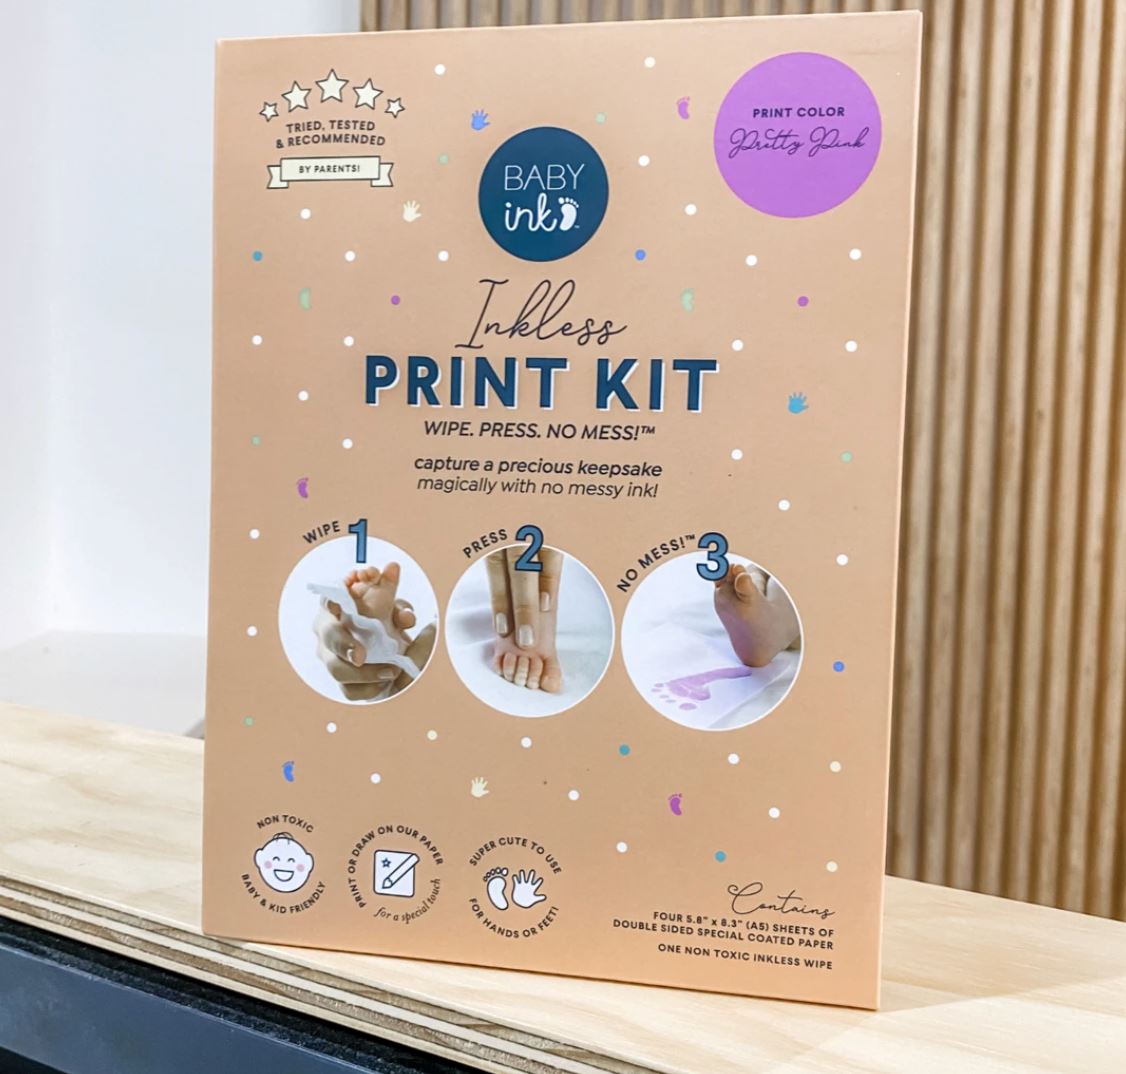 Ink-less Print Kit Arts & Crafts Babyink Pretty Pink 